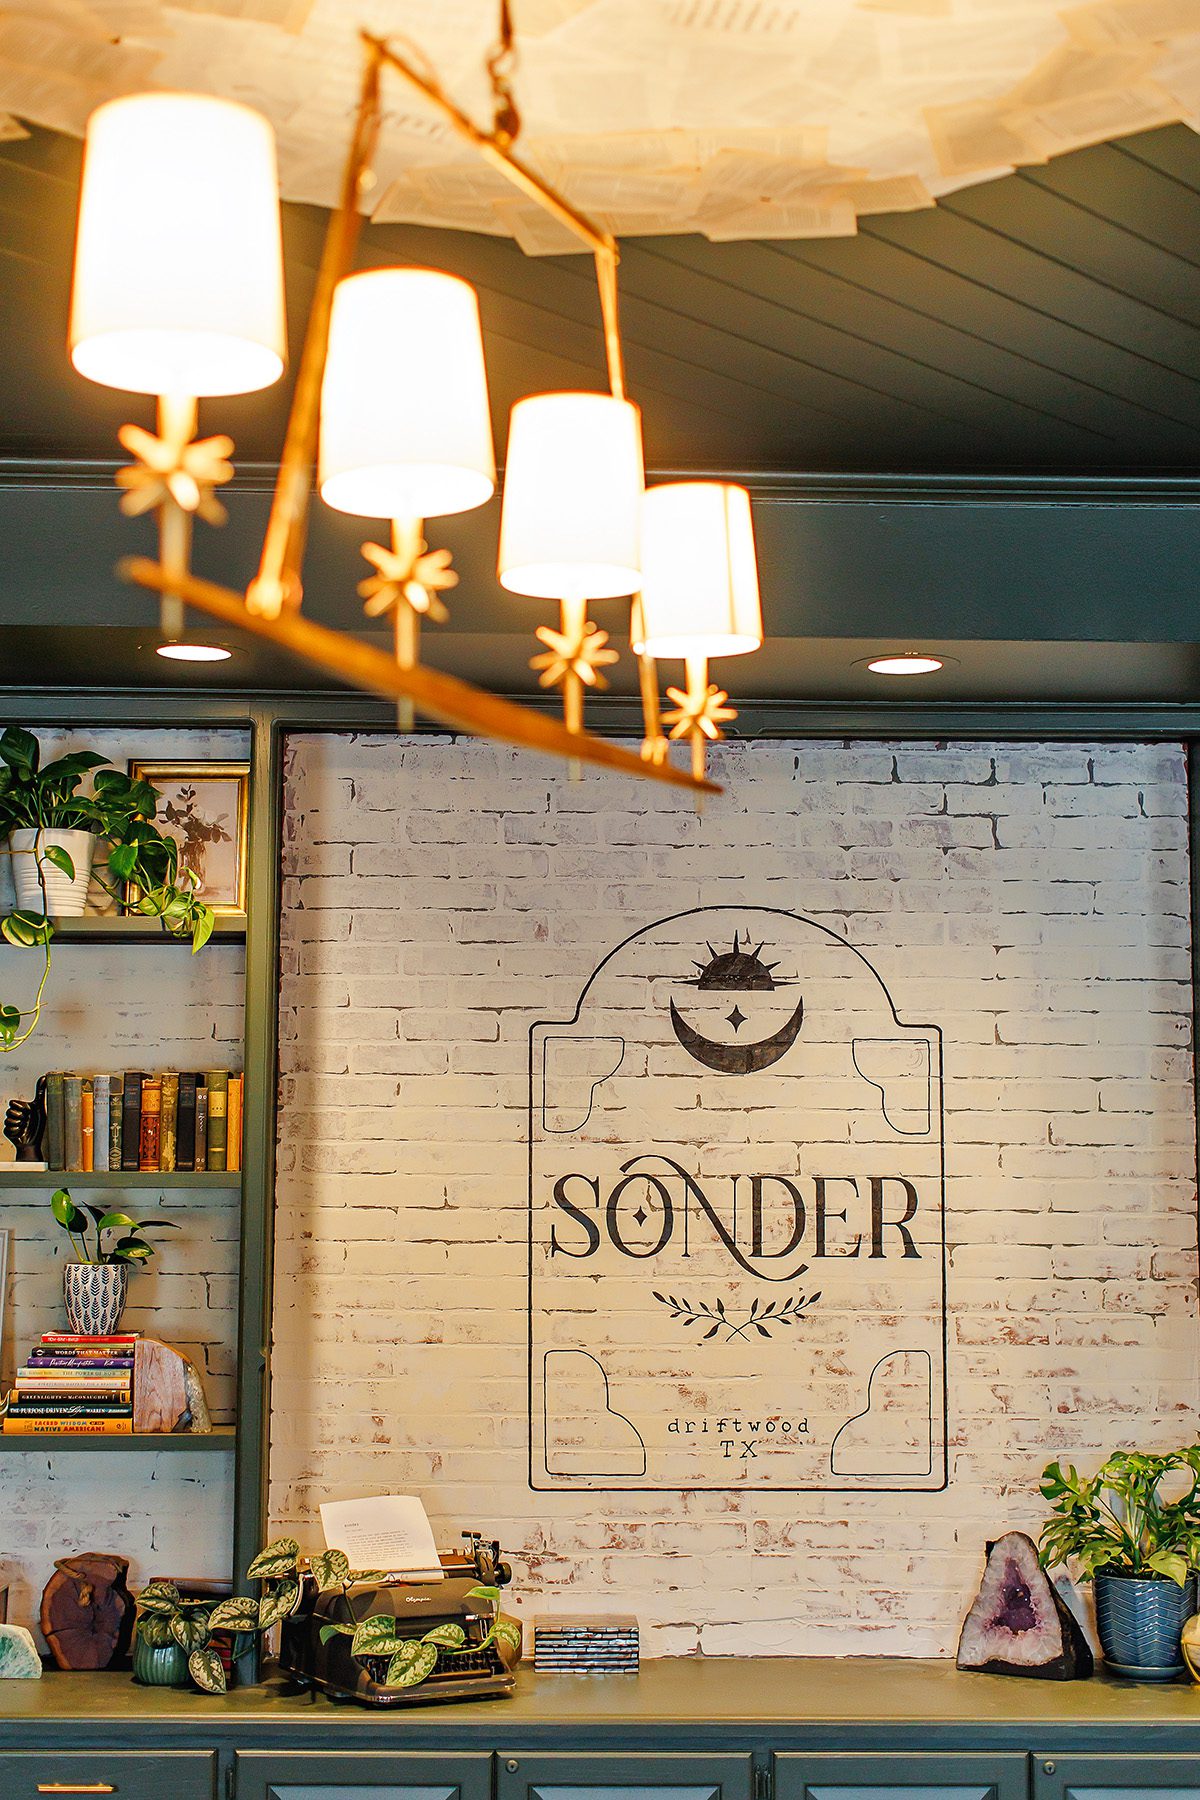 Sonder Coffe Lounge La Ventana Driftwood, Texas